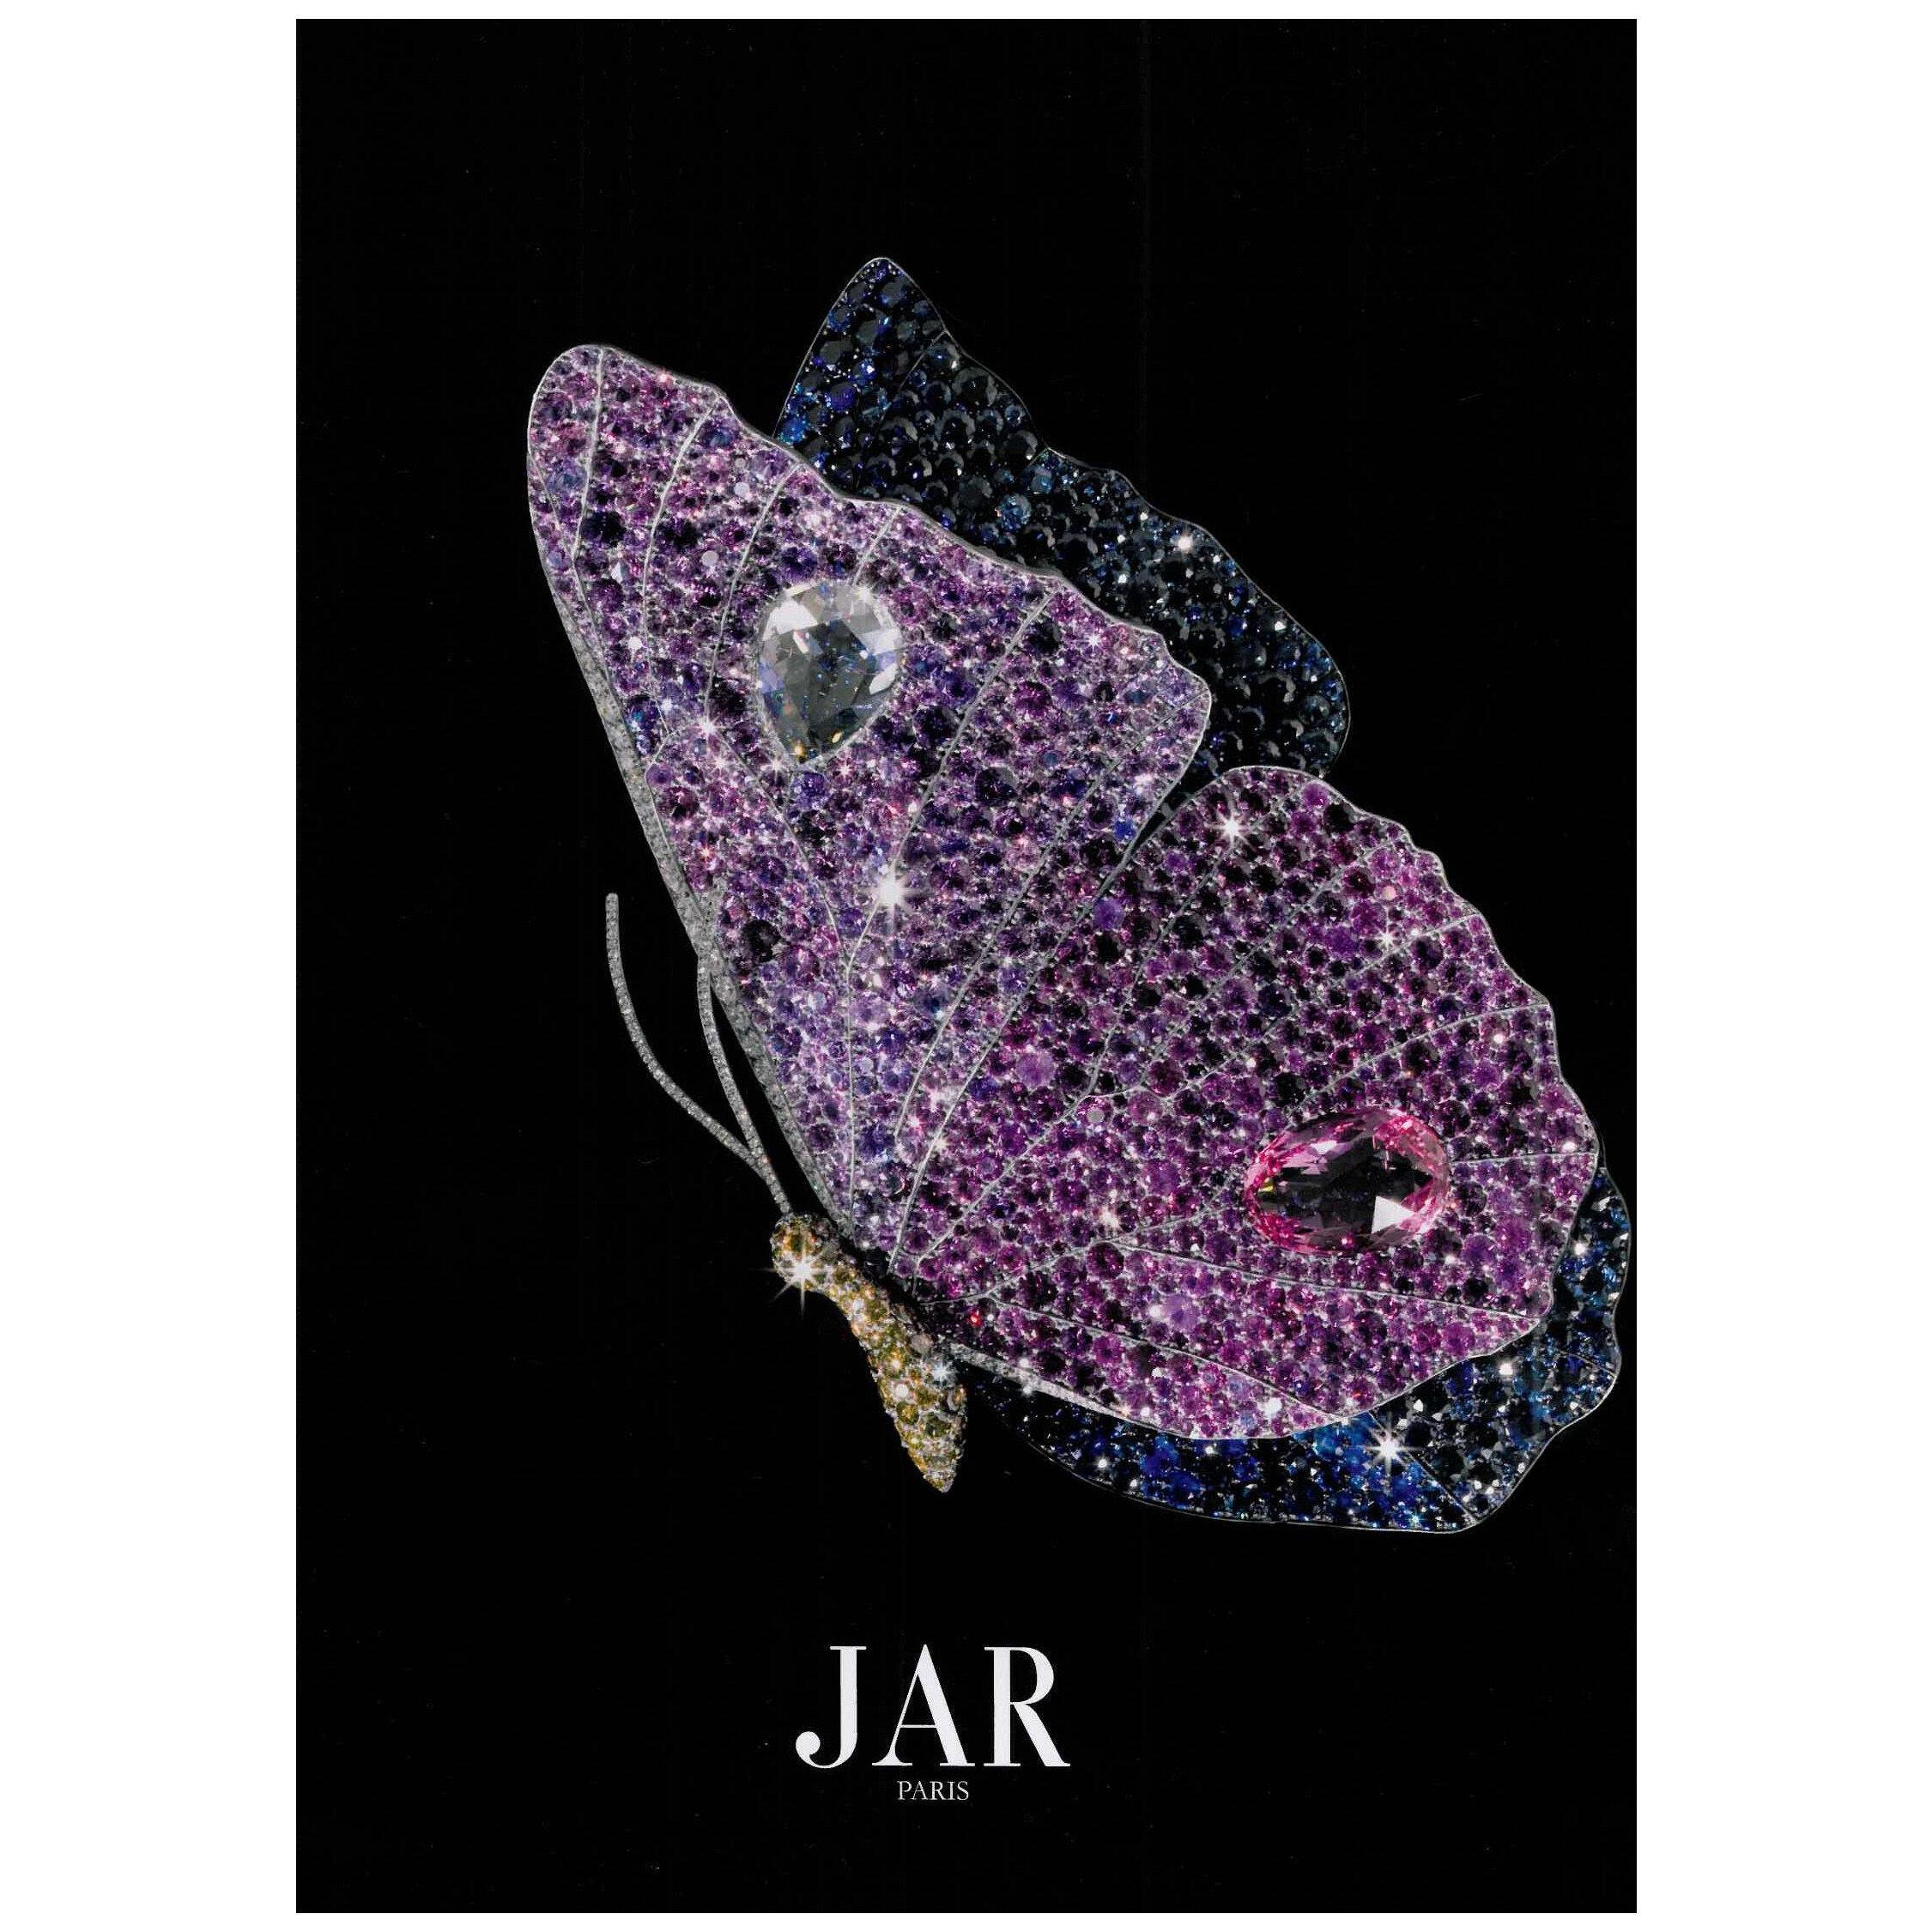 JAR PARIS Volume 2. Book